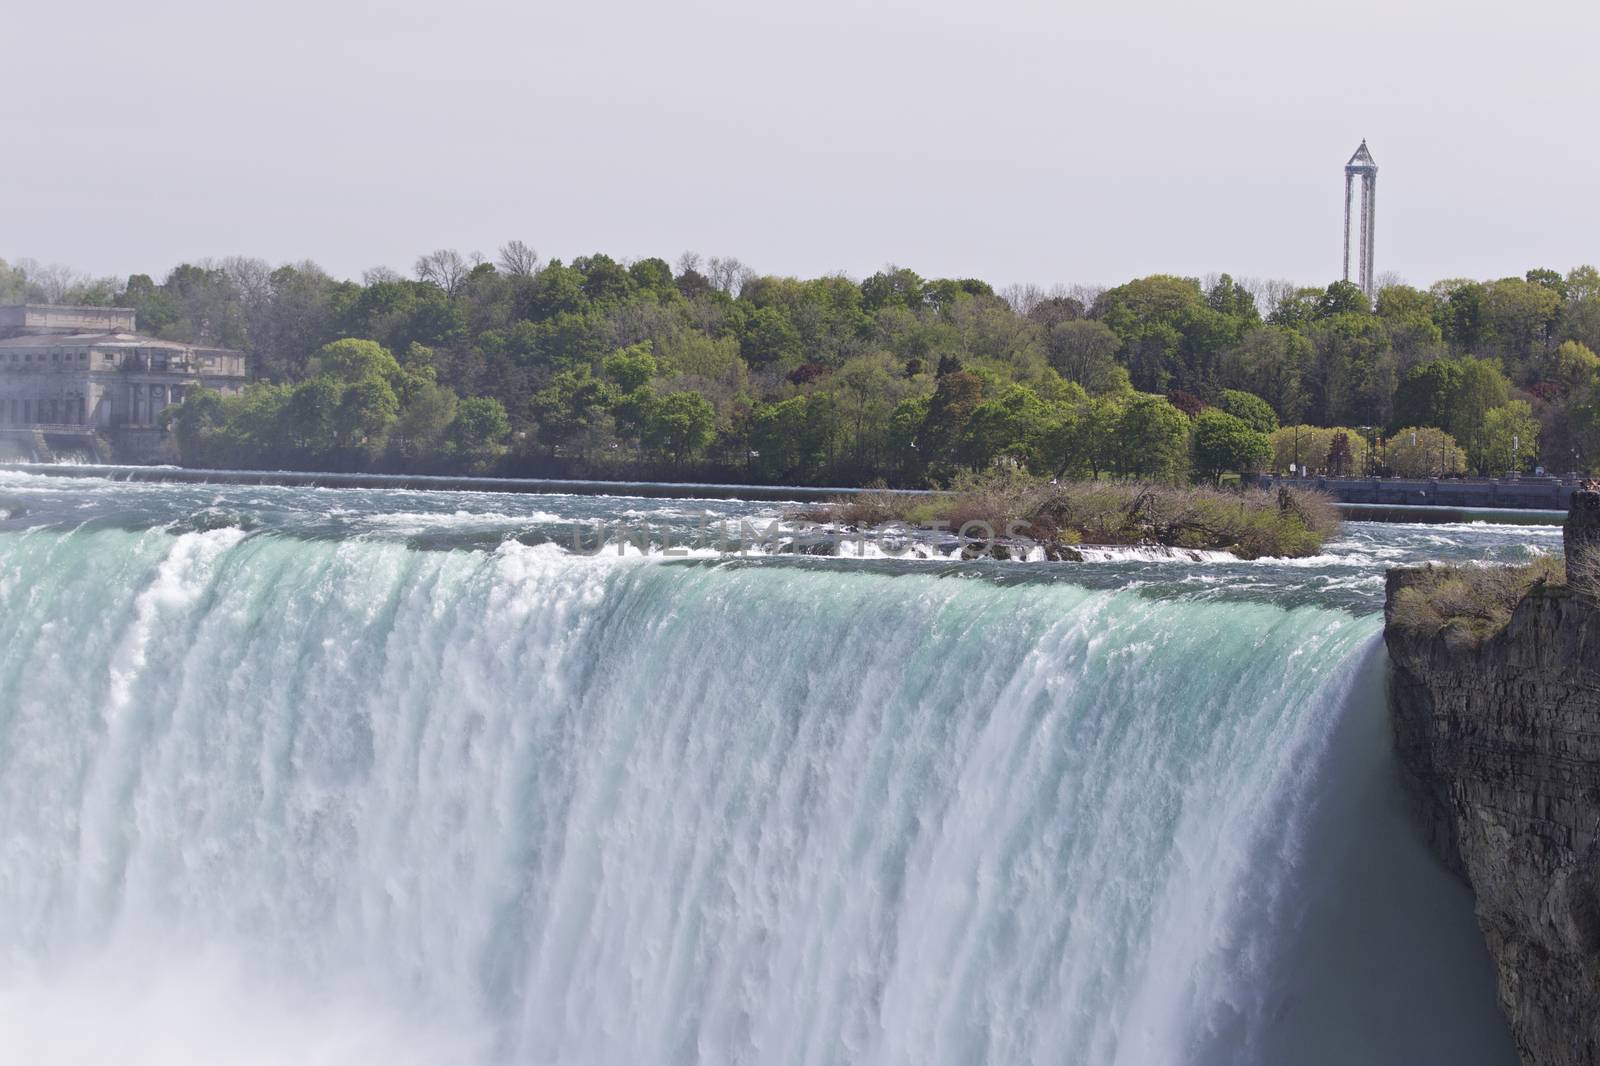 Beautiful isolated photo of the amazing Niagara falls Canadian side